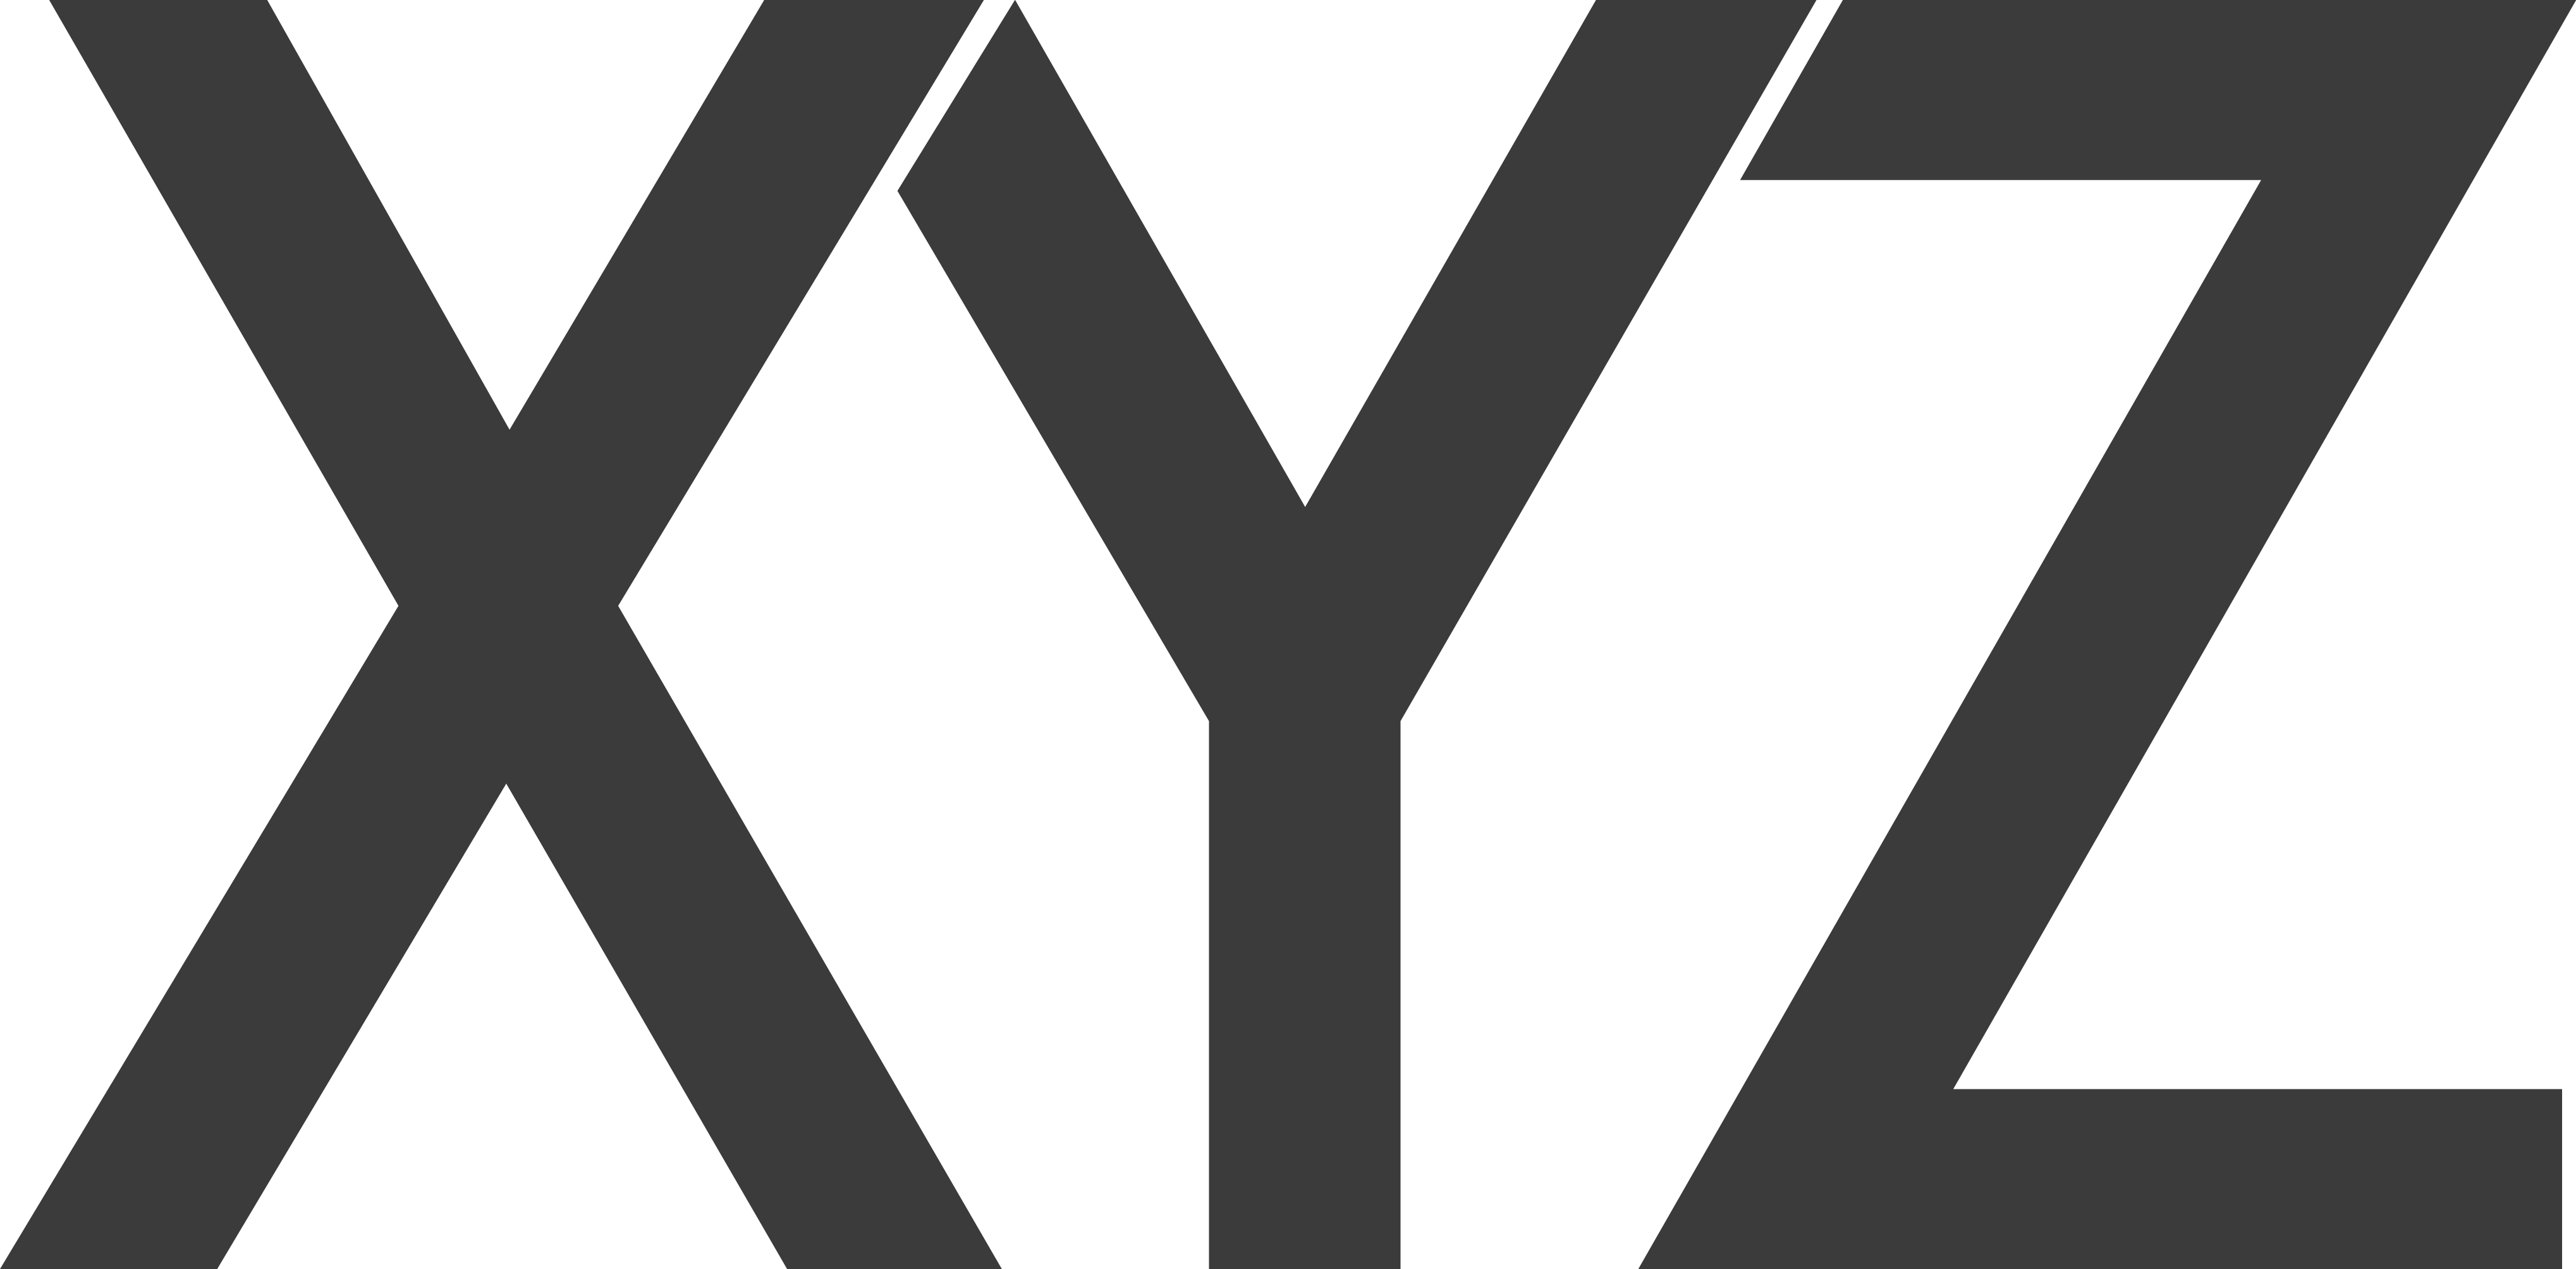 Логотип x. Эмблема Зет. Логотип с буквой x. Xyz логотип.